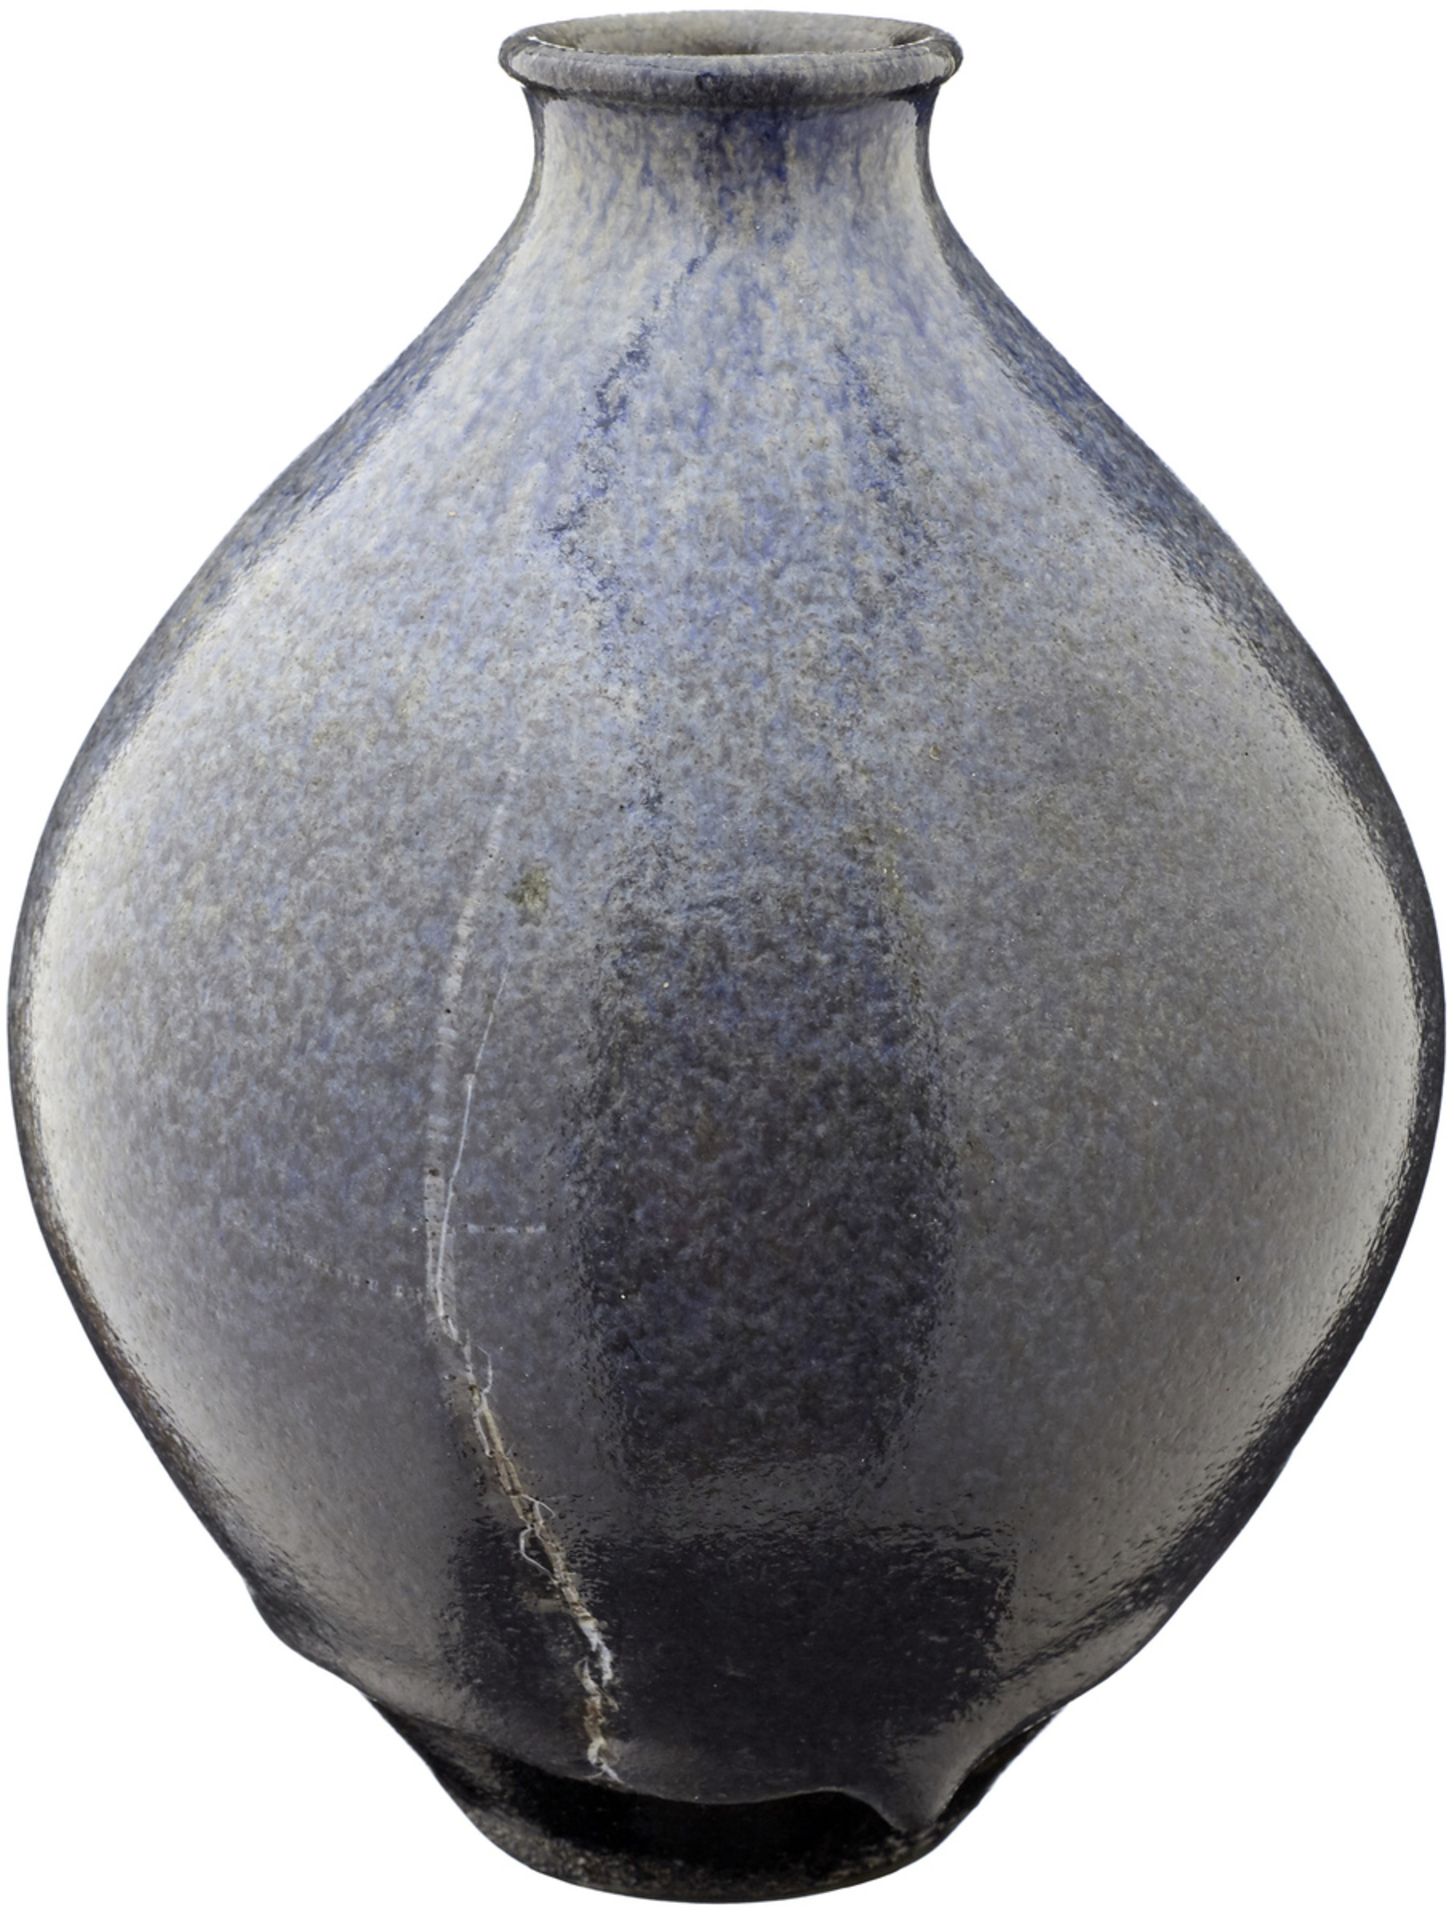 Vase "Mario Mascarin"Keramik. Blaugraue Laufglasur. Im Stand monogrammiert. Höhe 19 cm- - -20.00 %